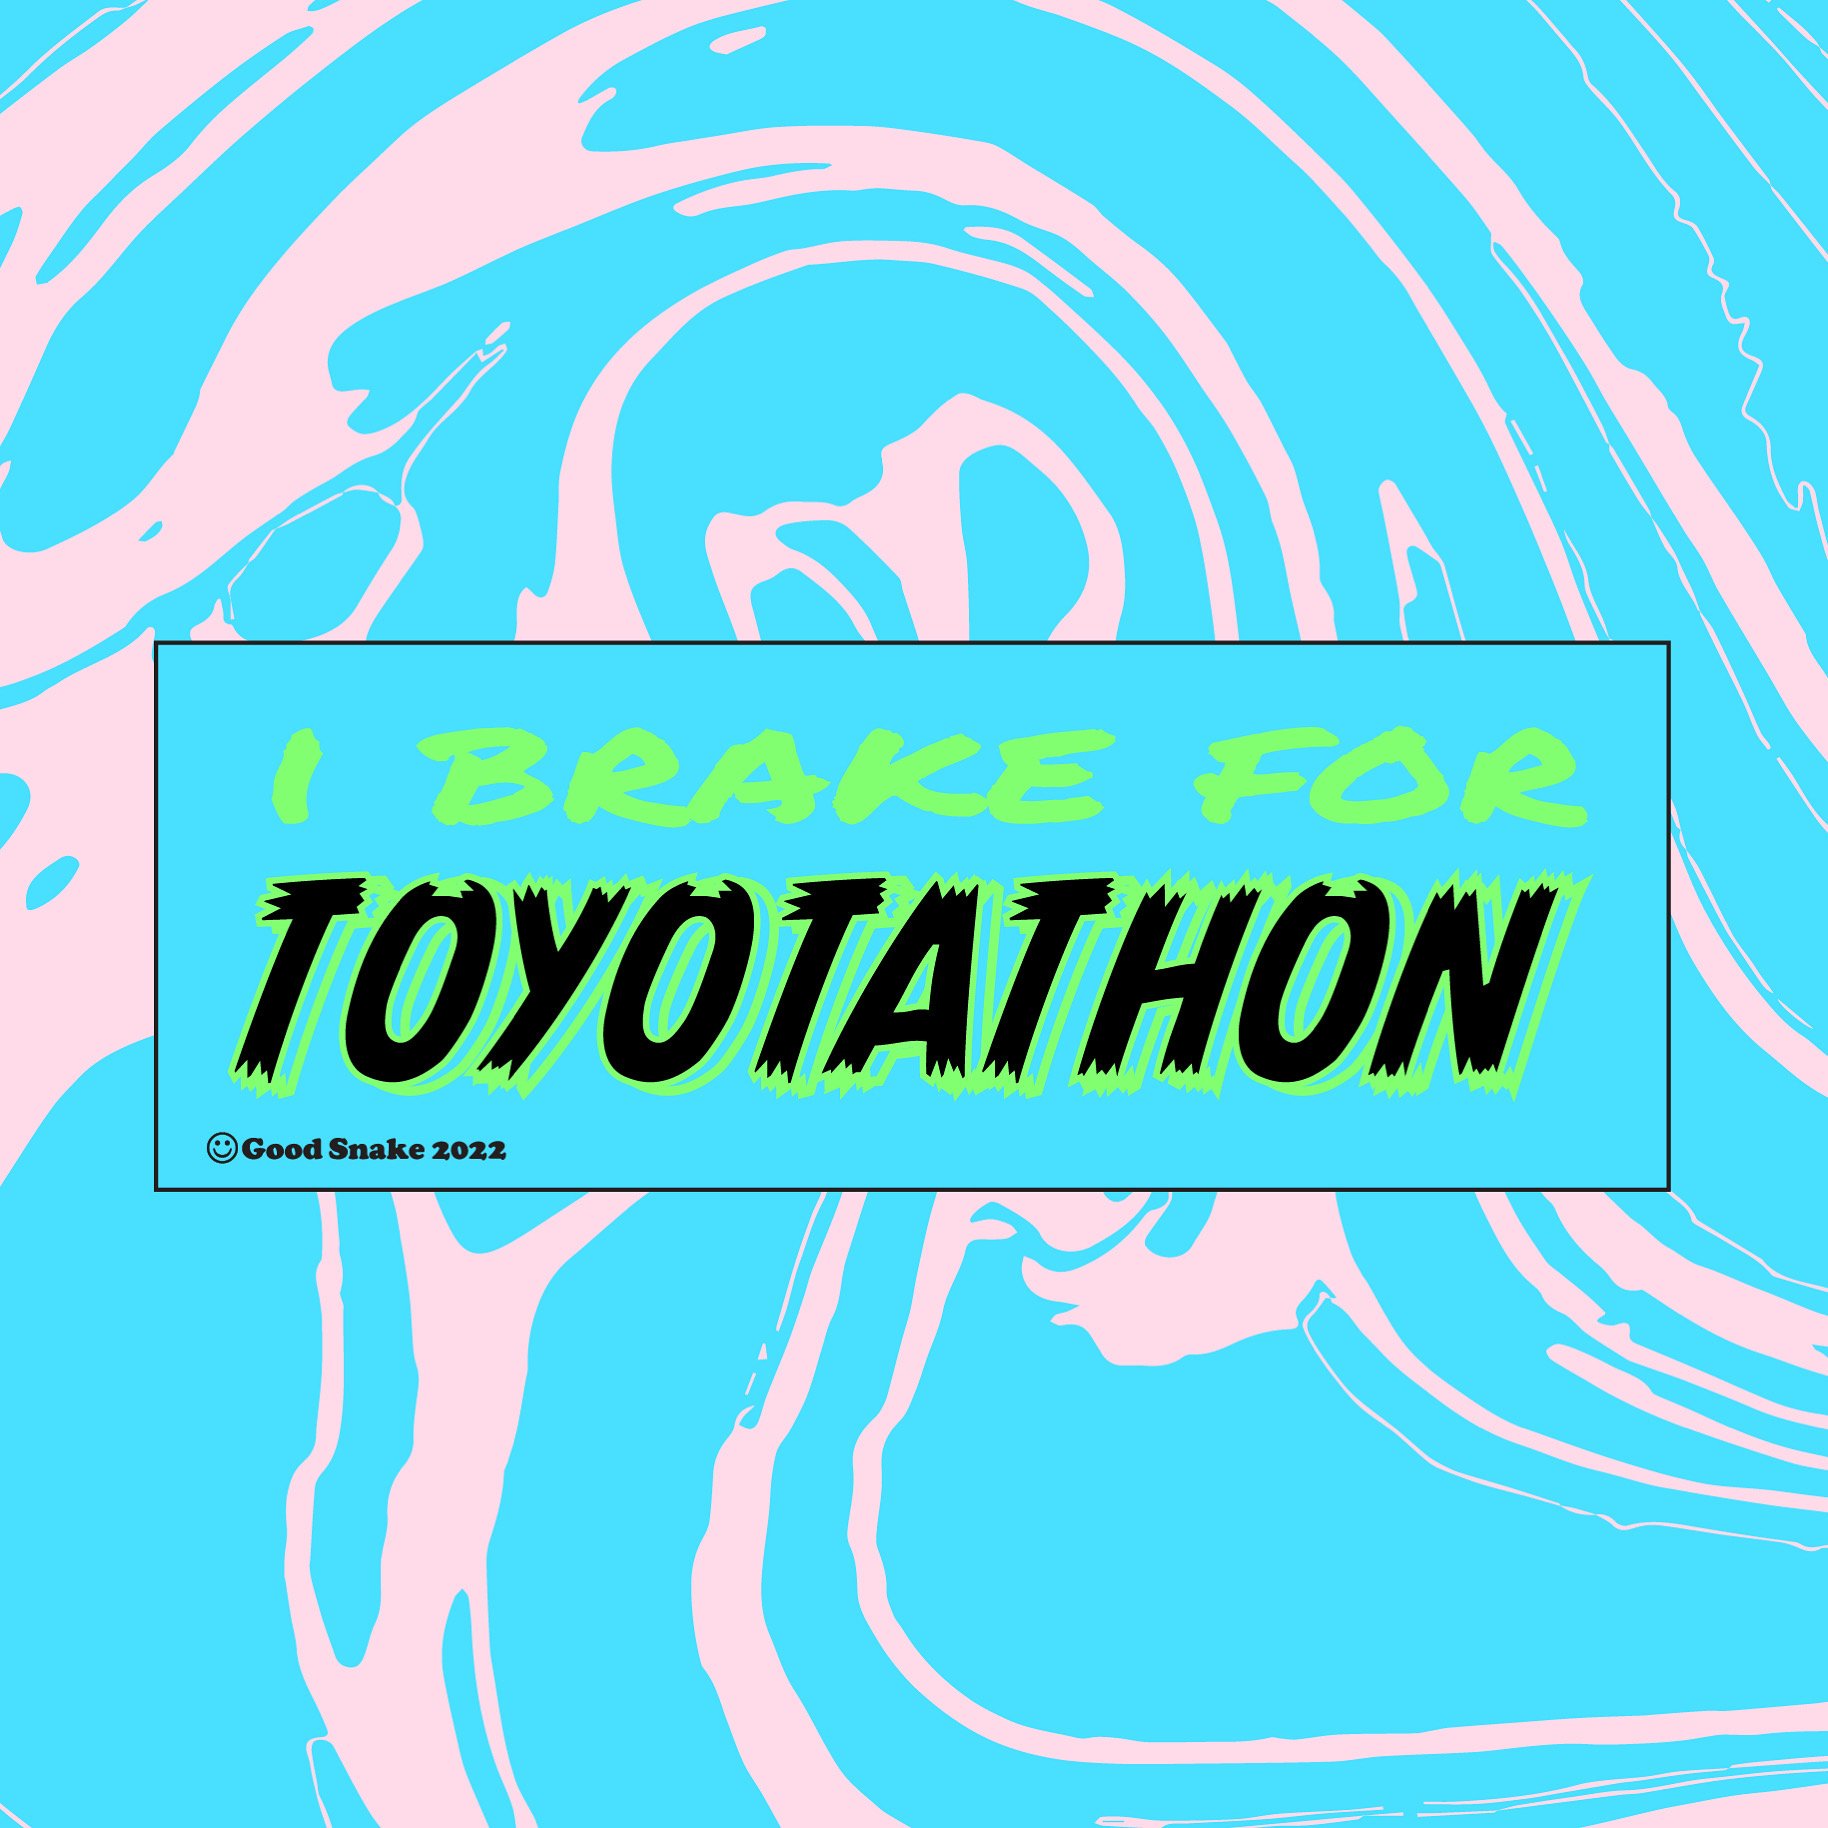 Toyota_Toyotathon.JPG